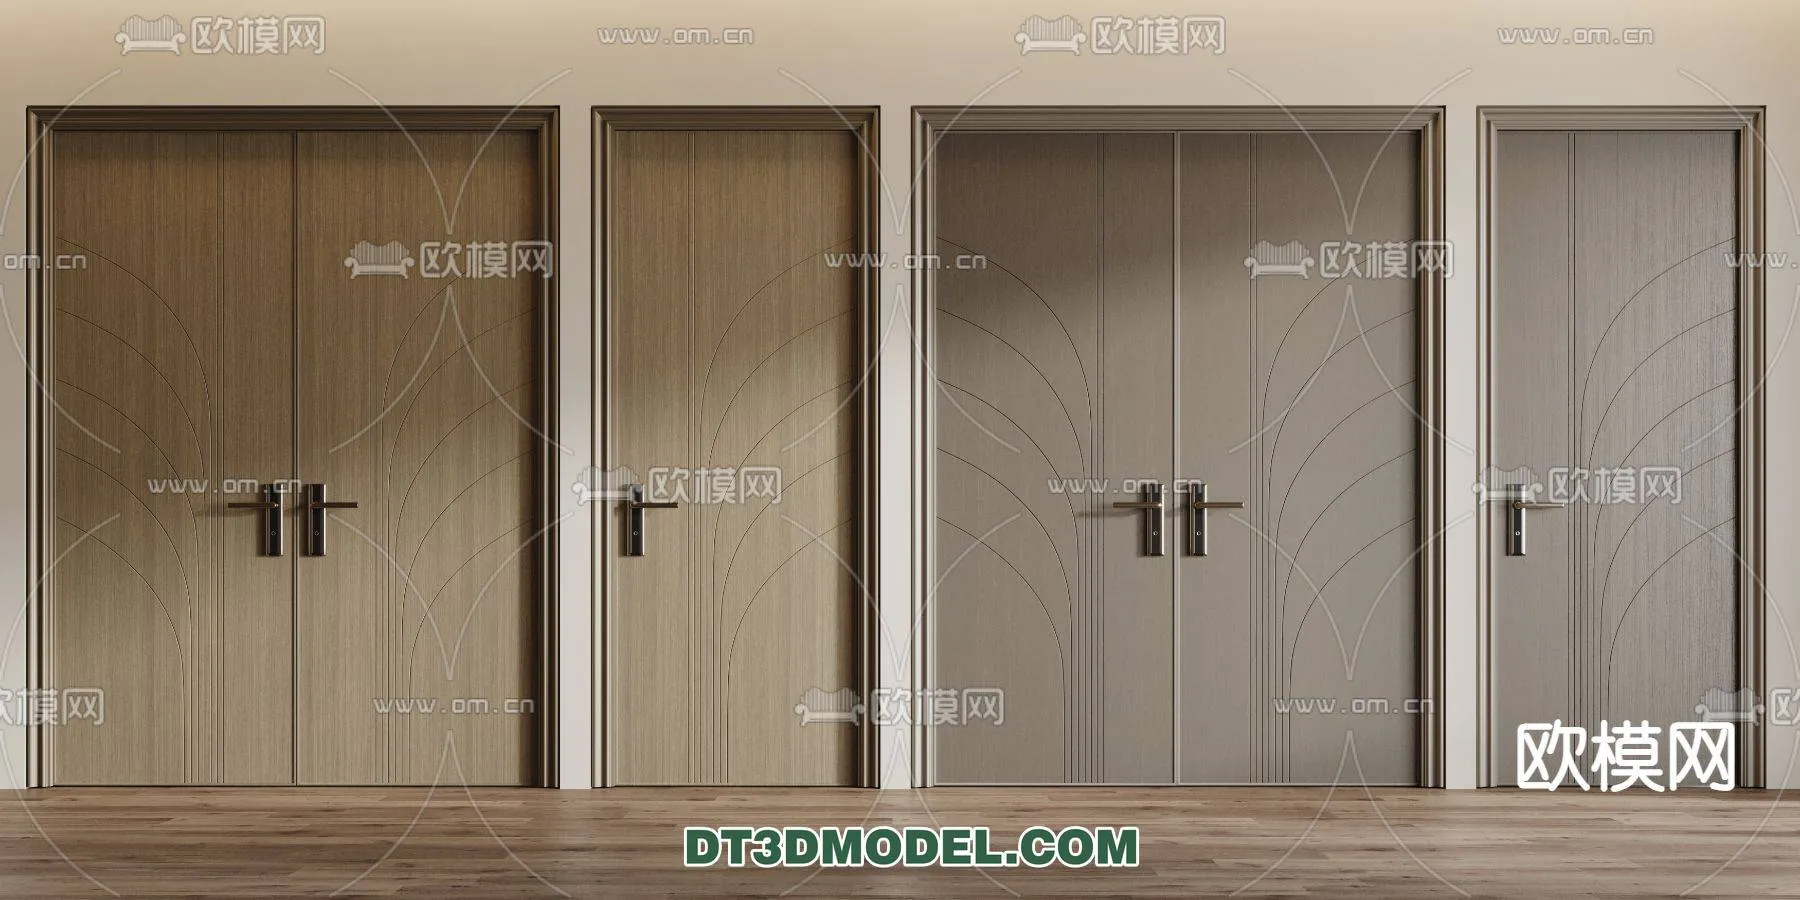 WABI SABI STYLE 3D MODELS – DOORS – 0004